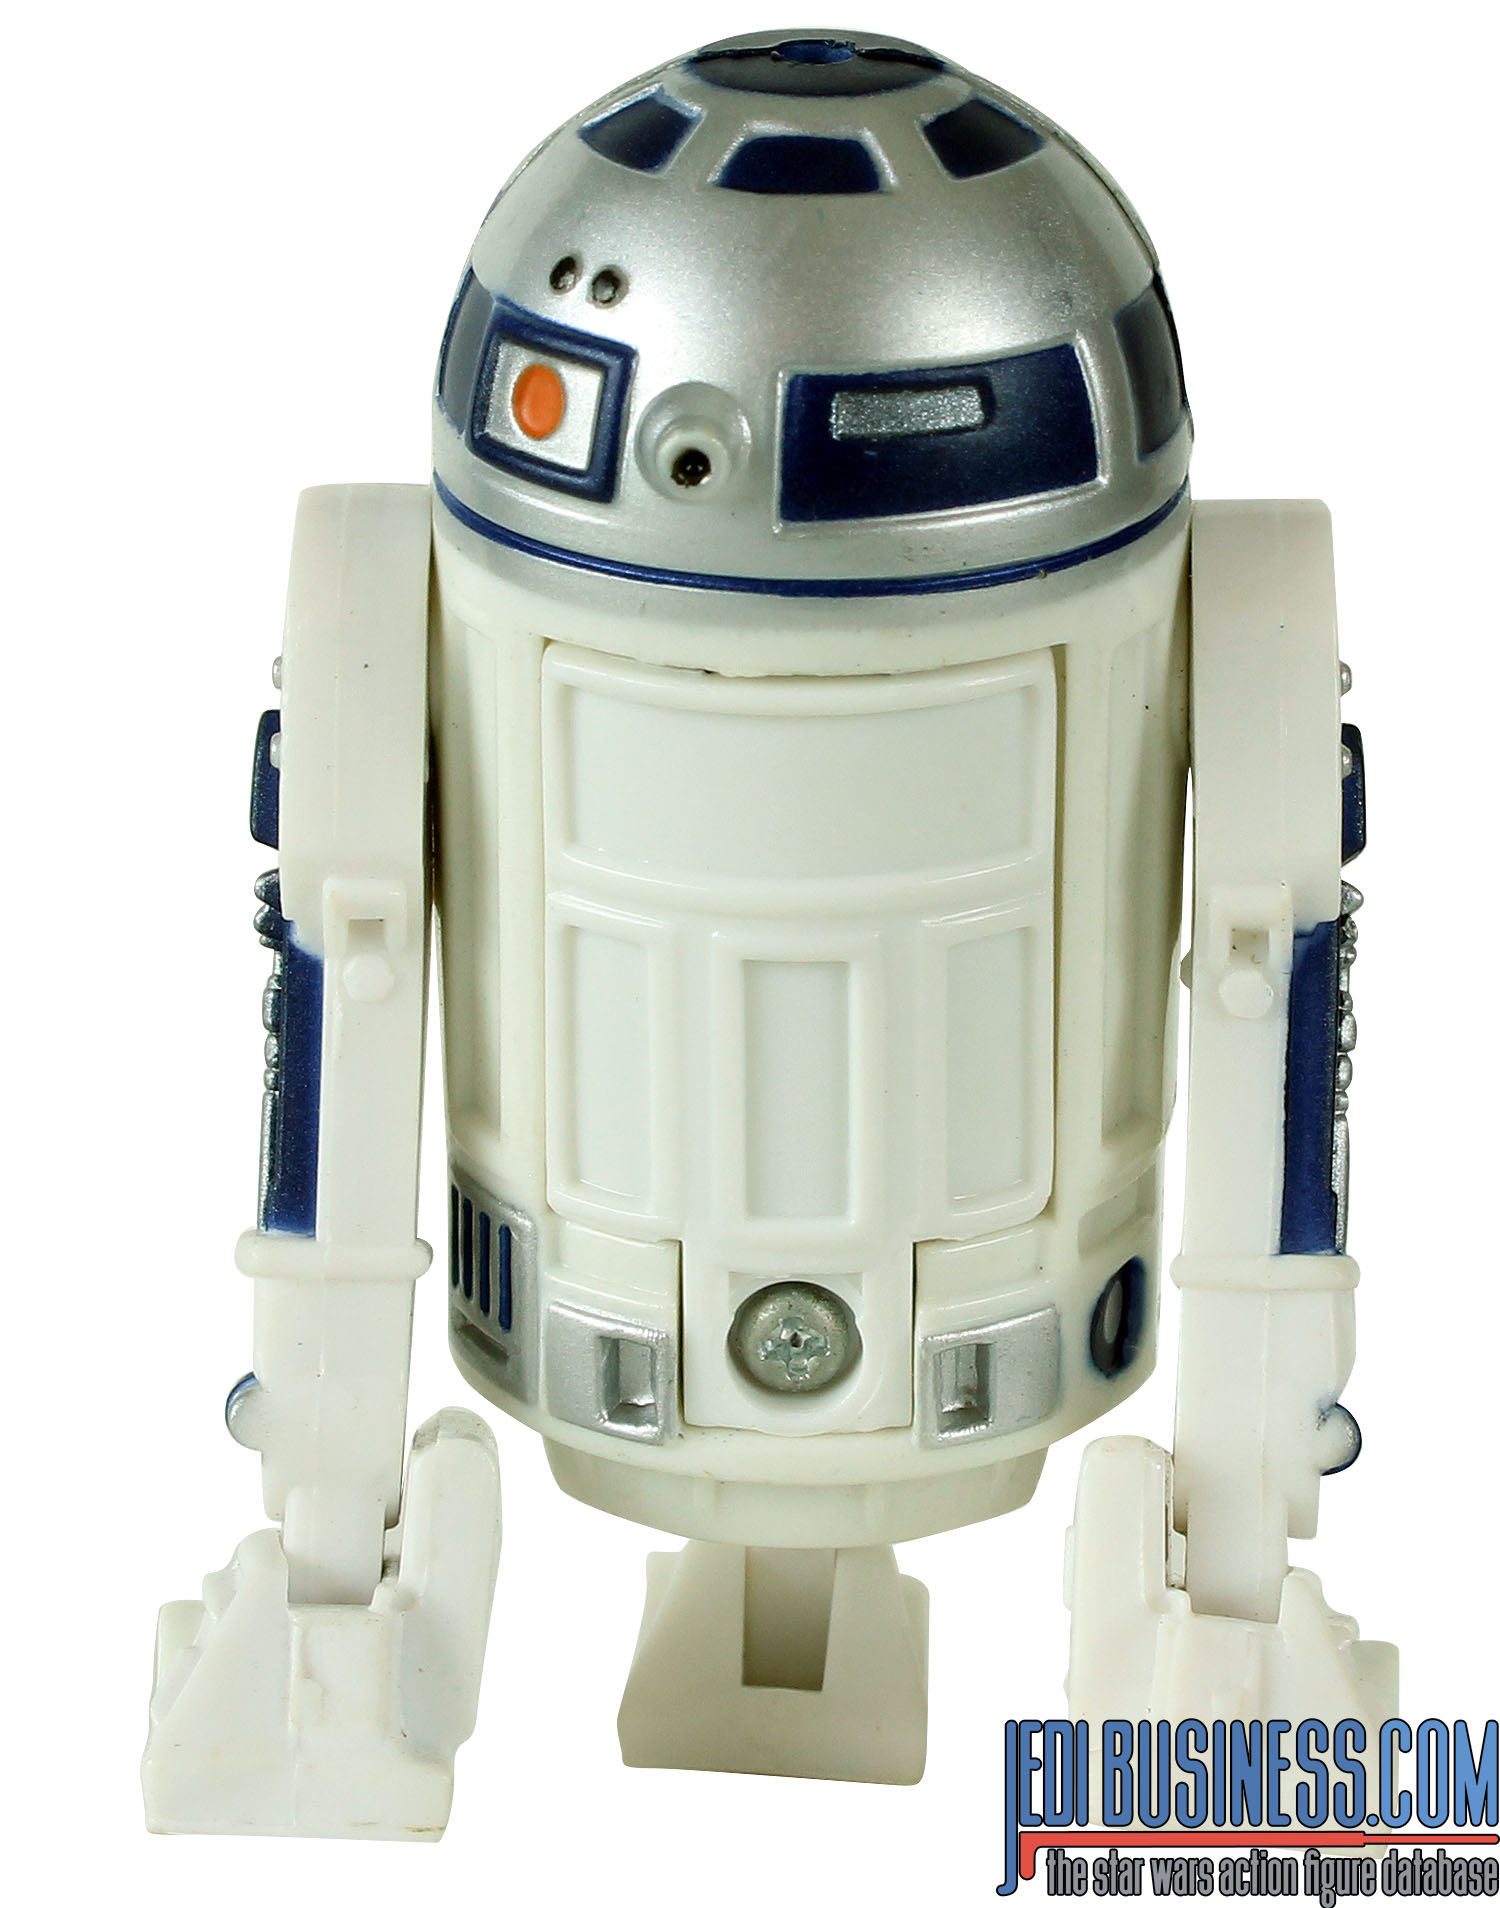 R2-D2 Greatest Battles